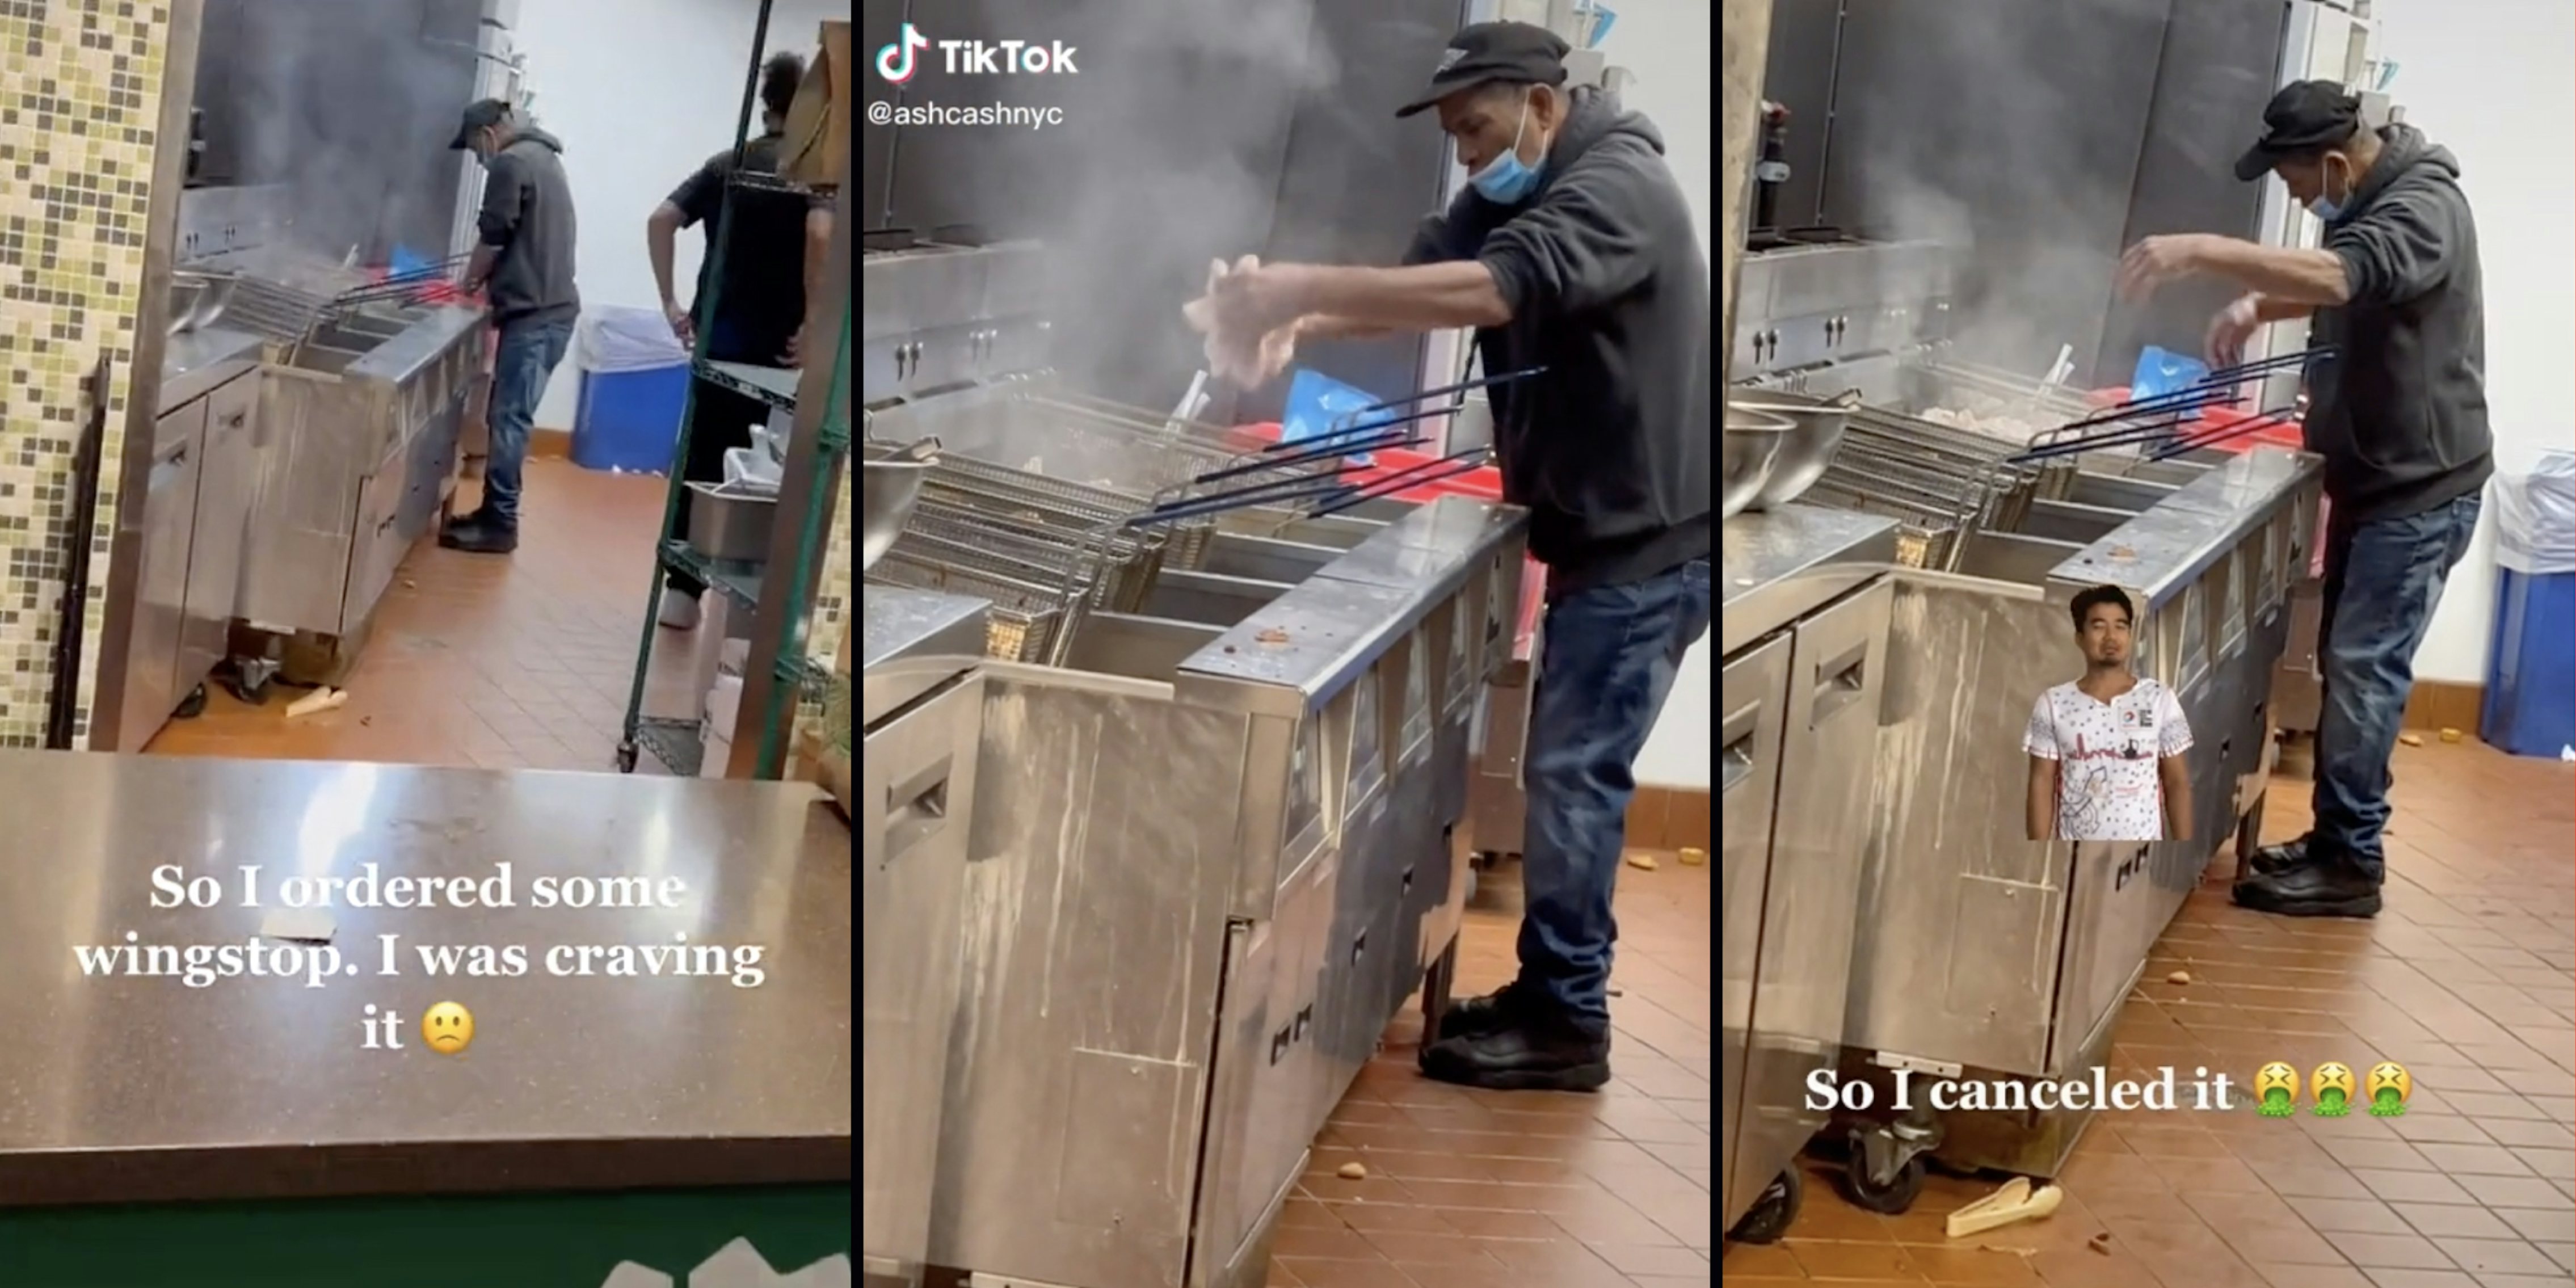 Wingstop worker handles food with no gloves in viral TikTok. User cancels order.